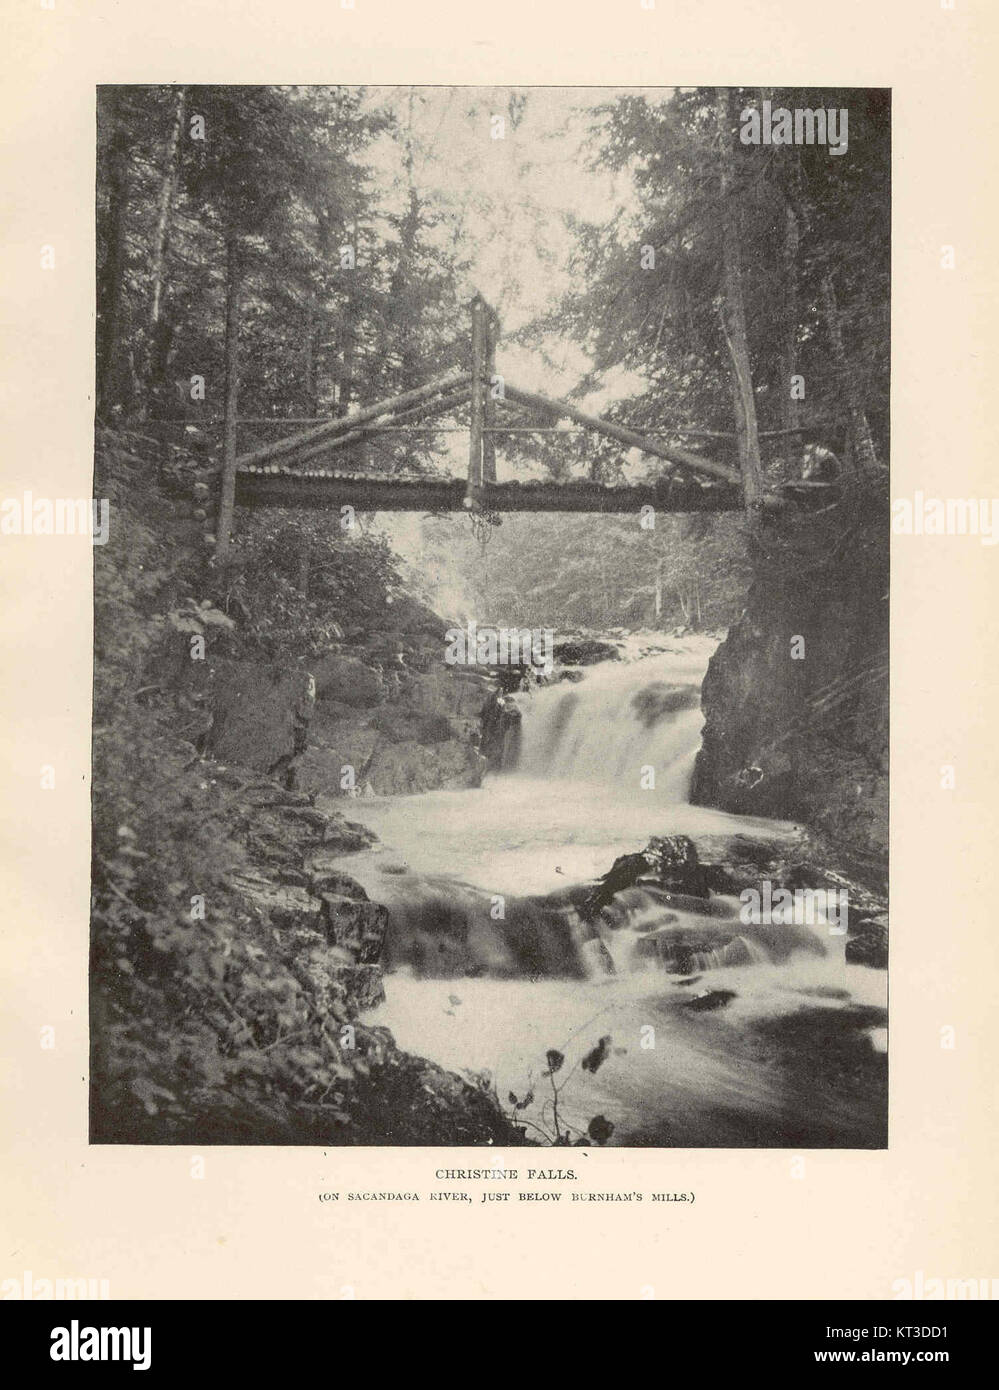 41648 Christine Falls (On Sacandaga River, just below Burnham's Mills) Stock Photo